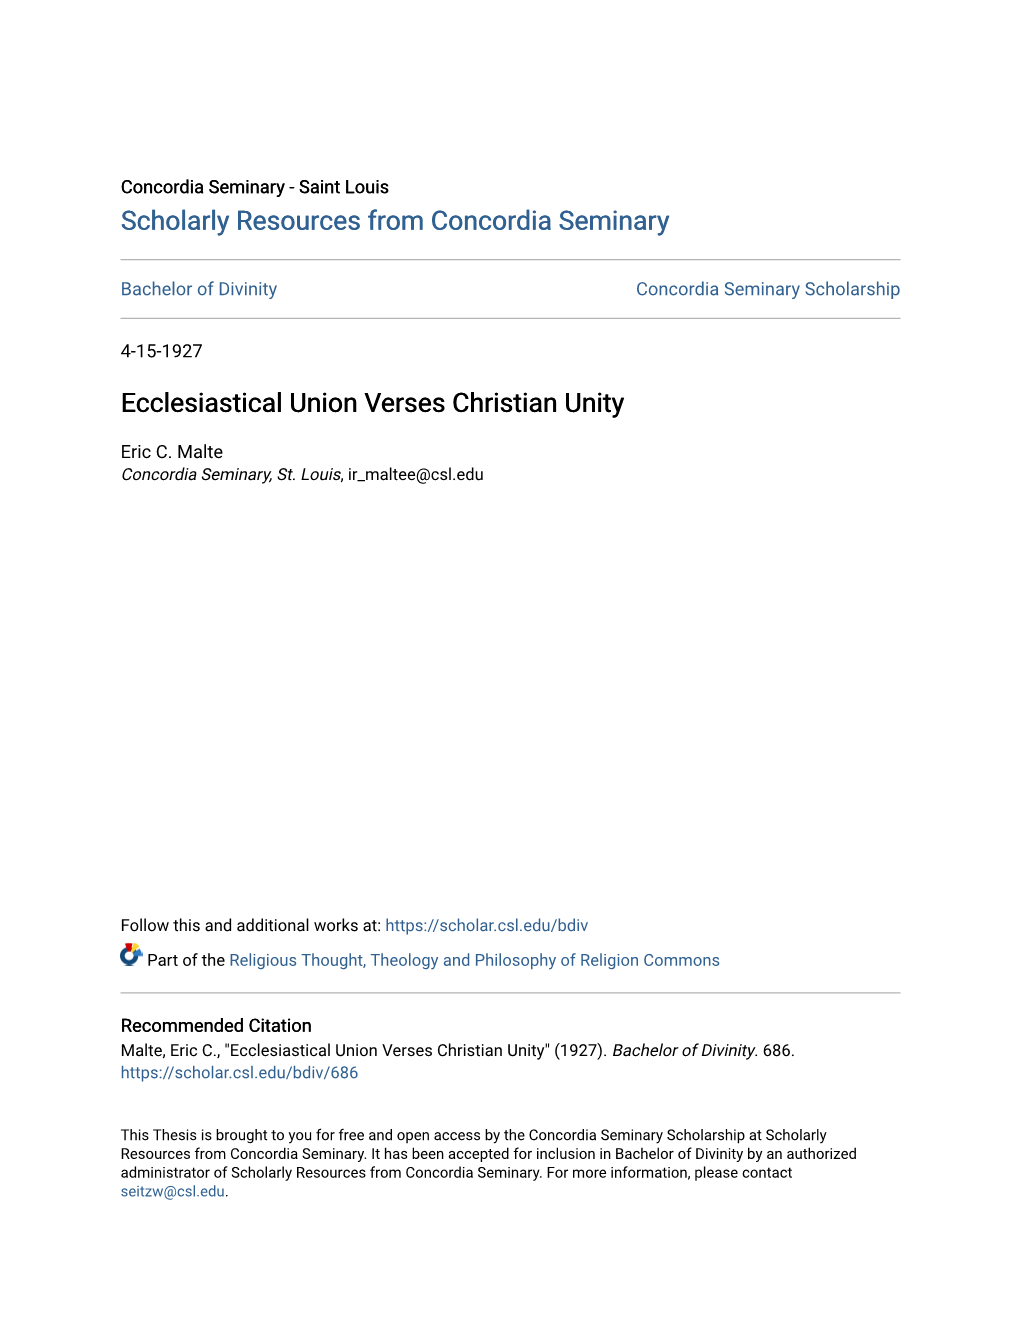 Ecclesiastical Union Verses Christian Unity